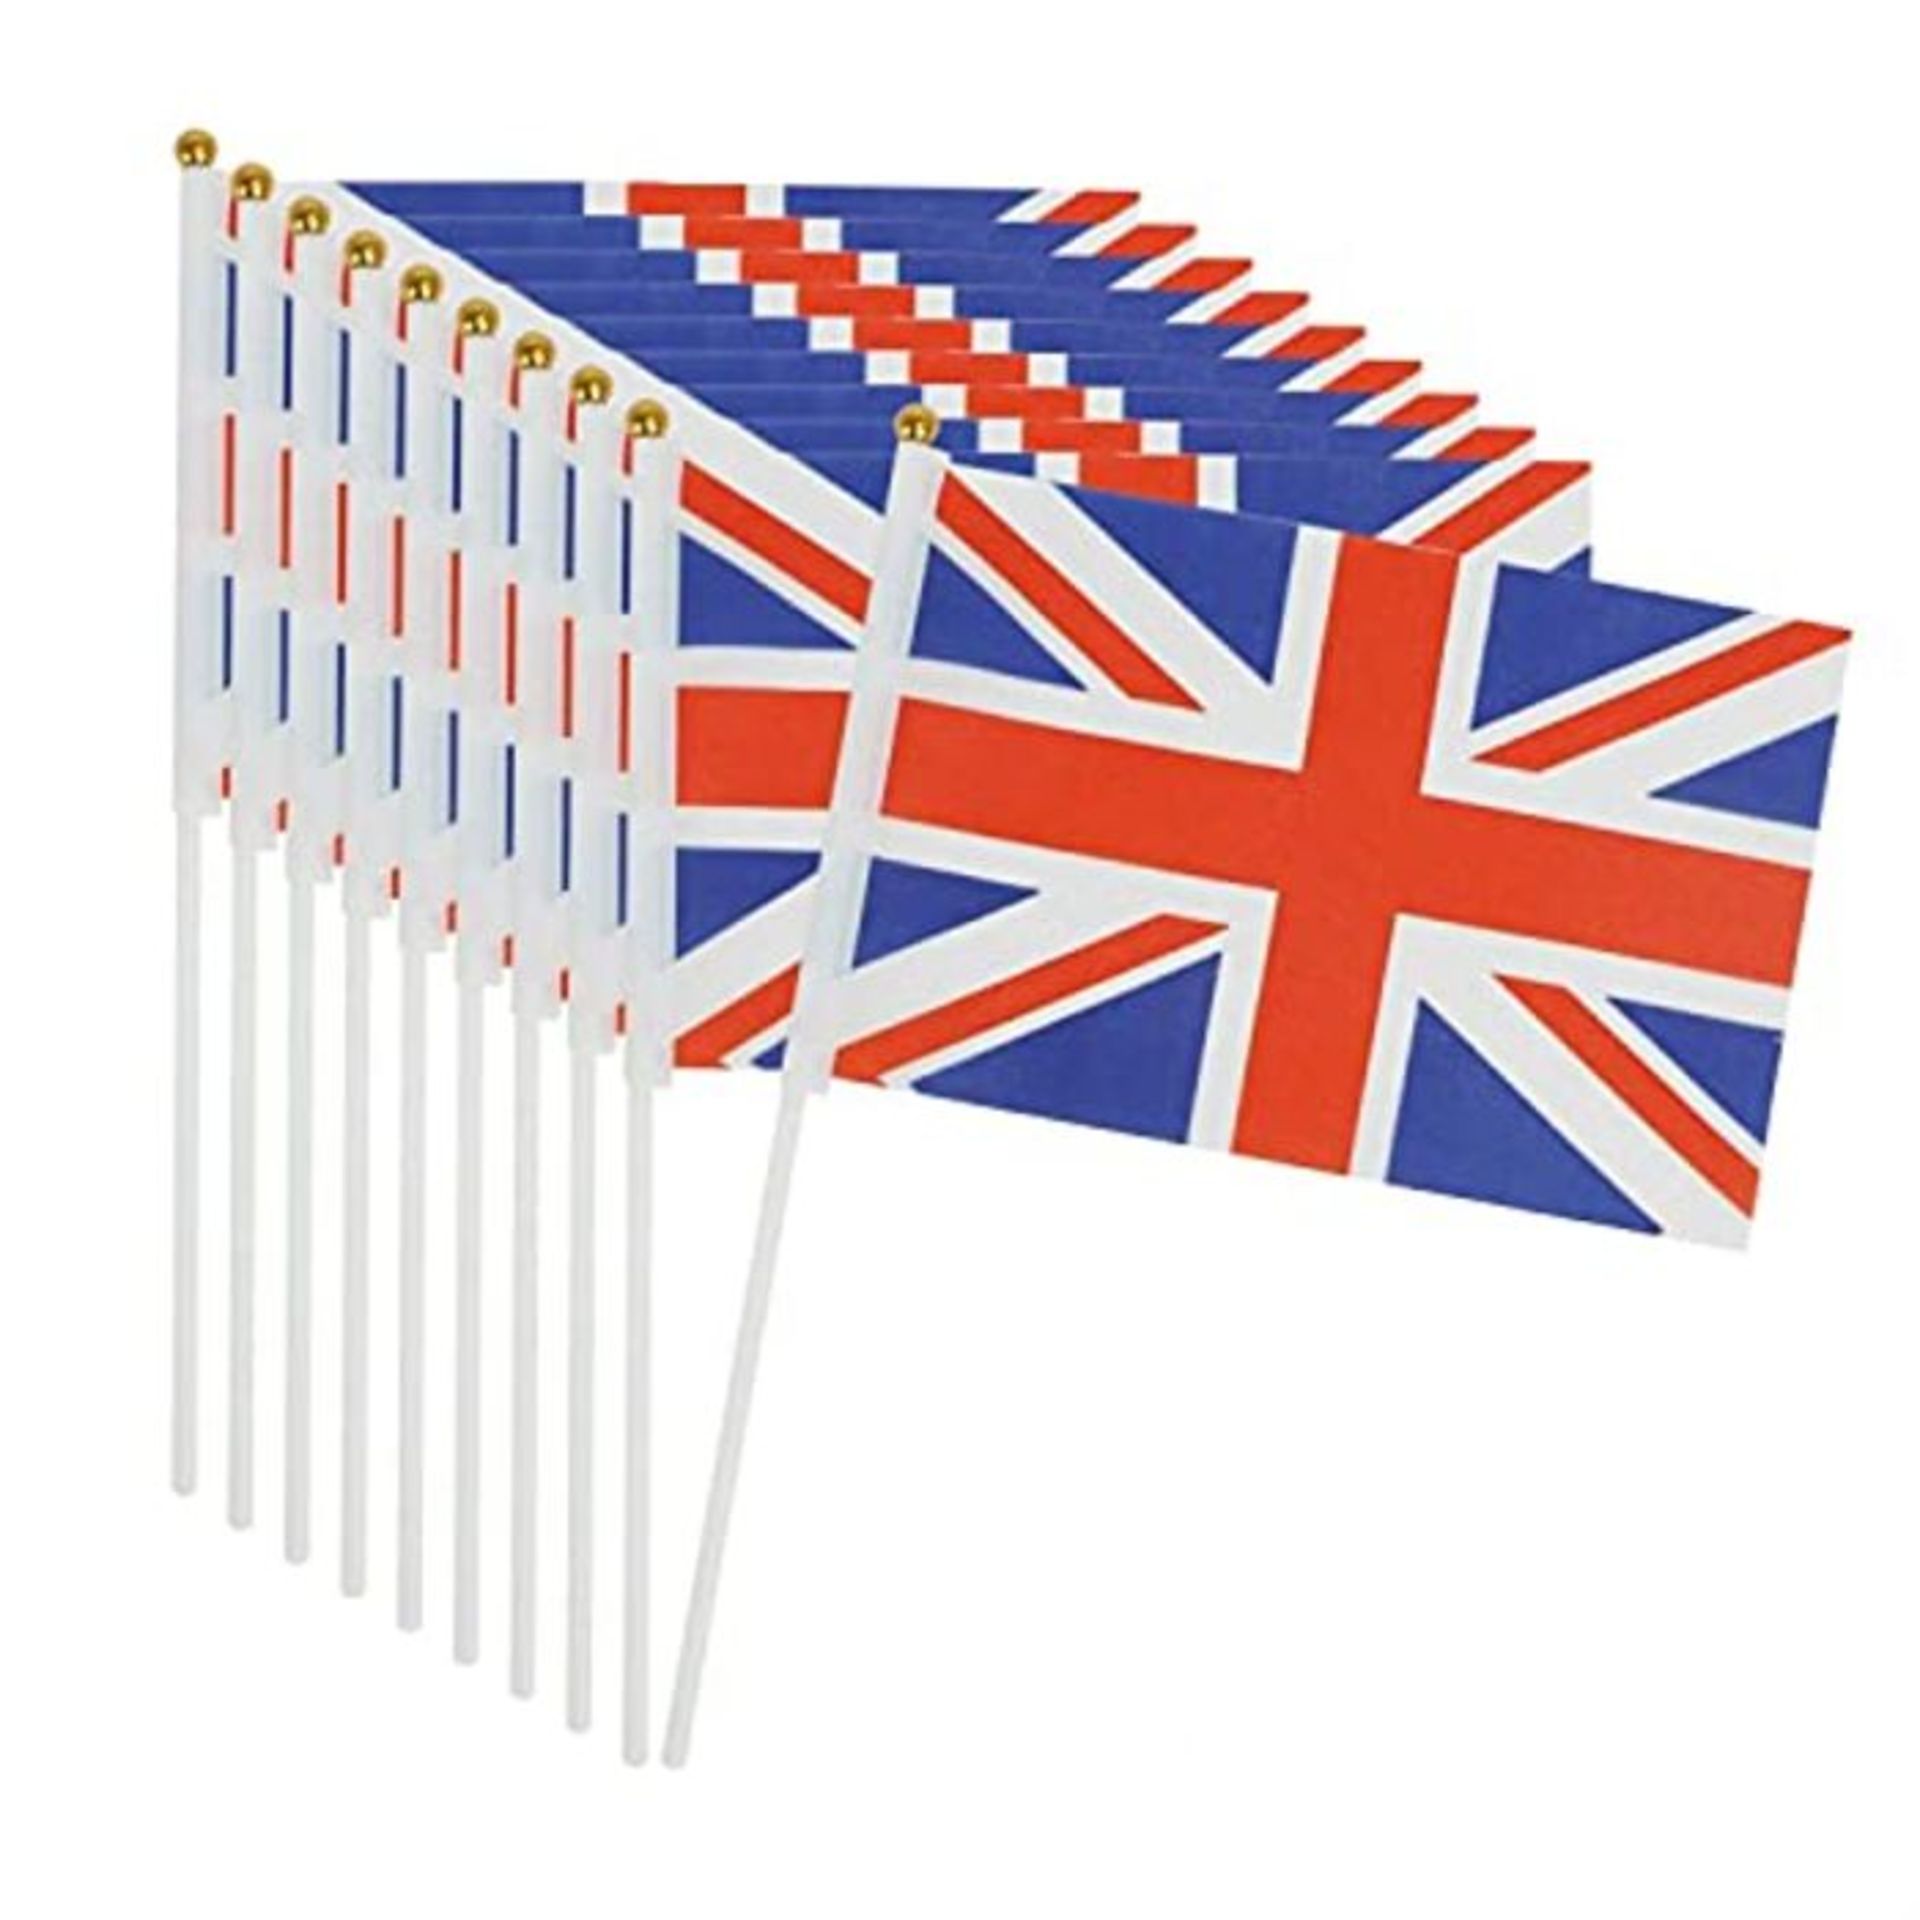 [INCOMPLETE] RUIXIA 50PCS Union Jack Waving Hand Flags with Sticks,British Union Jack